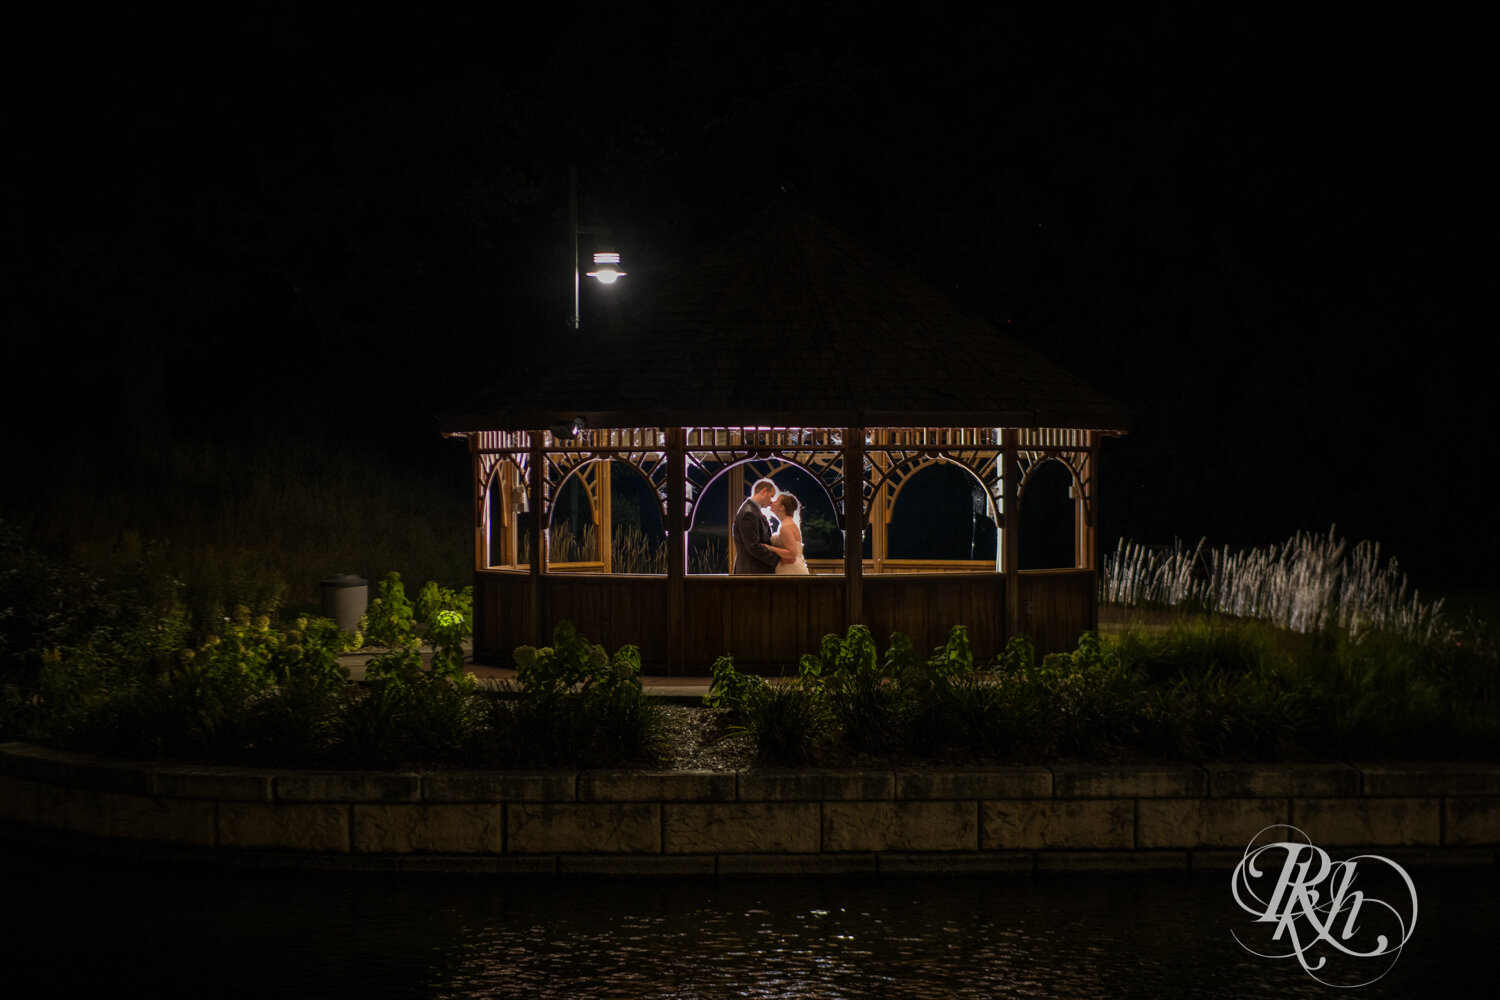 Backlit night wedding photography at Eagan Community Center